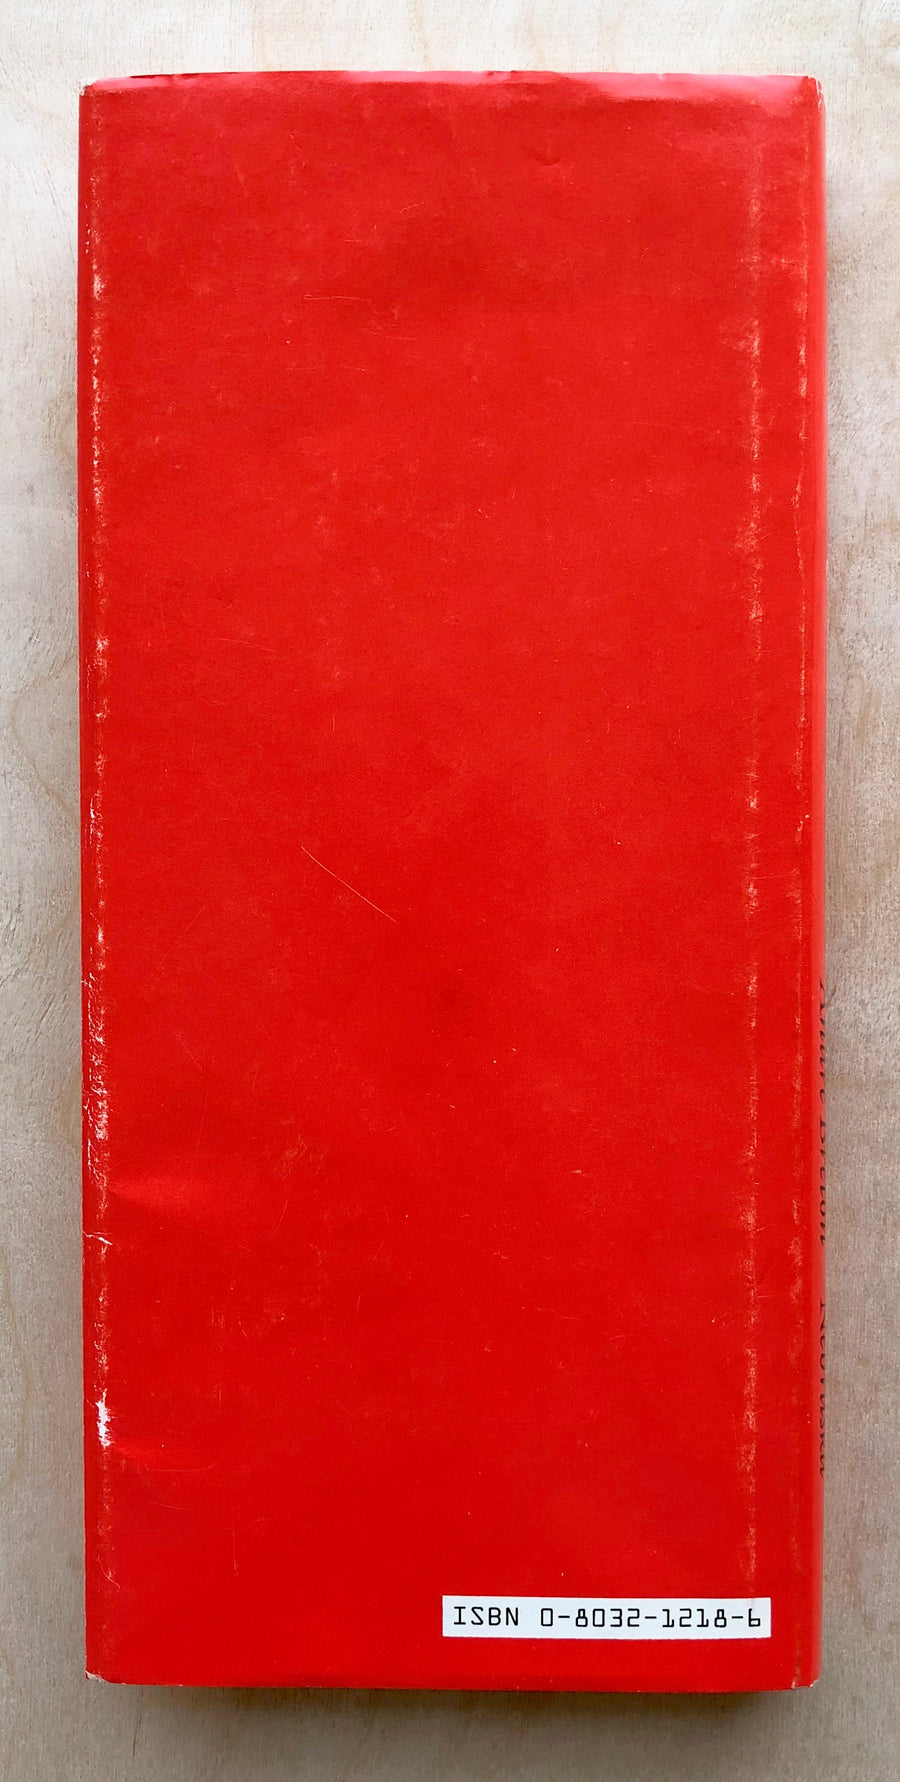 COMMUNICATING VESSELS by André Breton